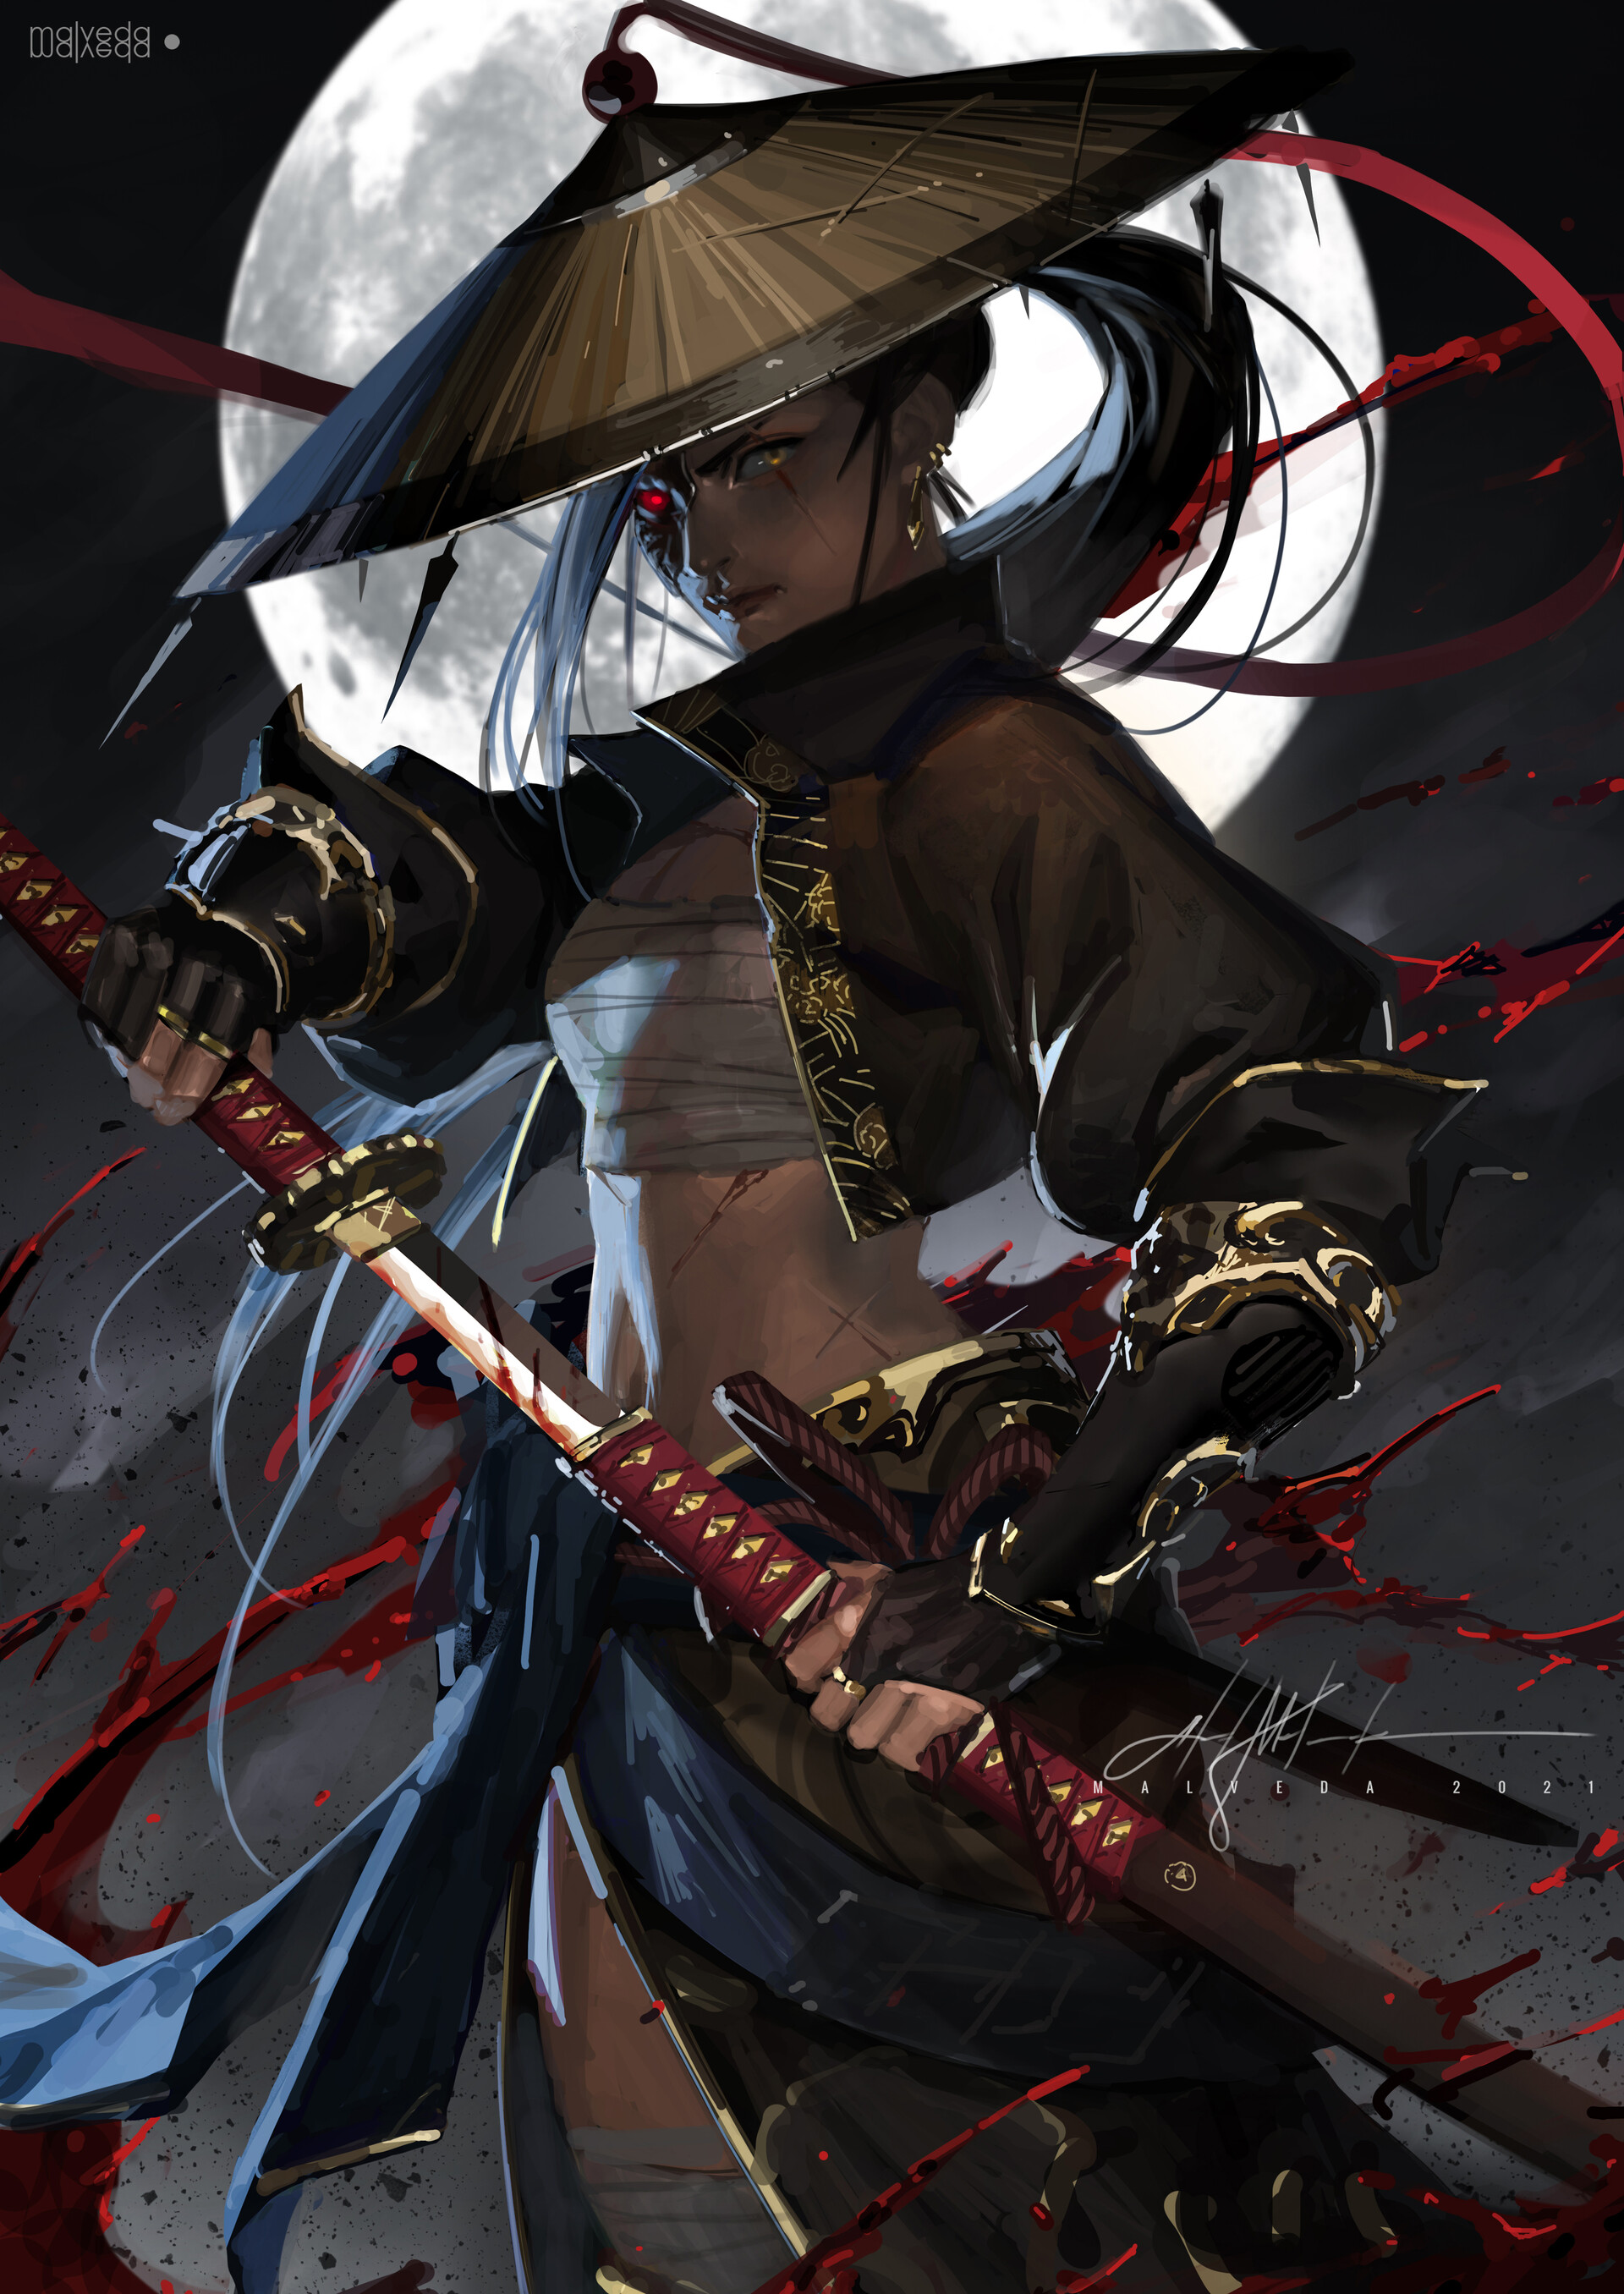 General 1920x2712 Malveda (Artist) digital art artwork katana shinobi sarashi straw hat red eyes warrior female warrior black clothing